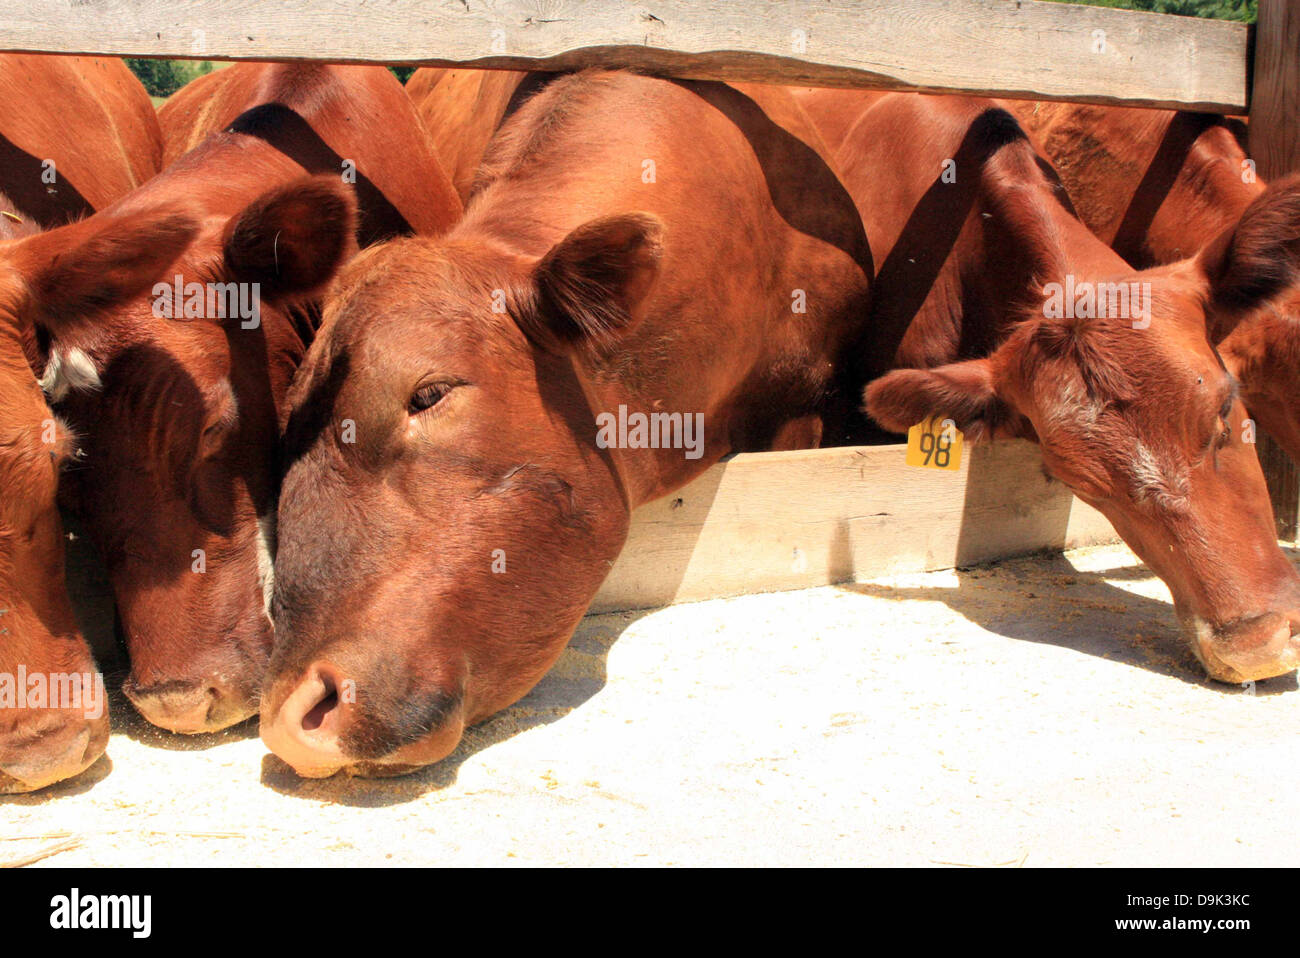 Angus angus calf cow bull animal livestock farm country rural red herd Stock Photo